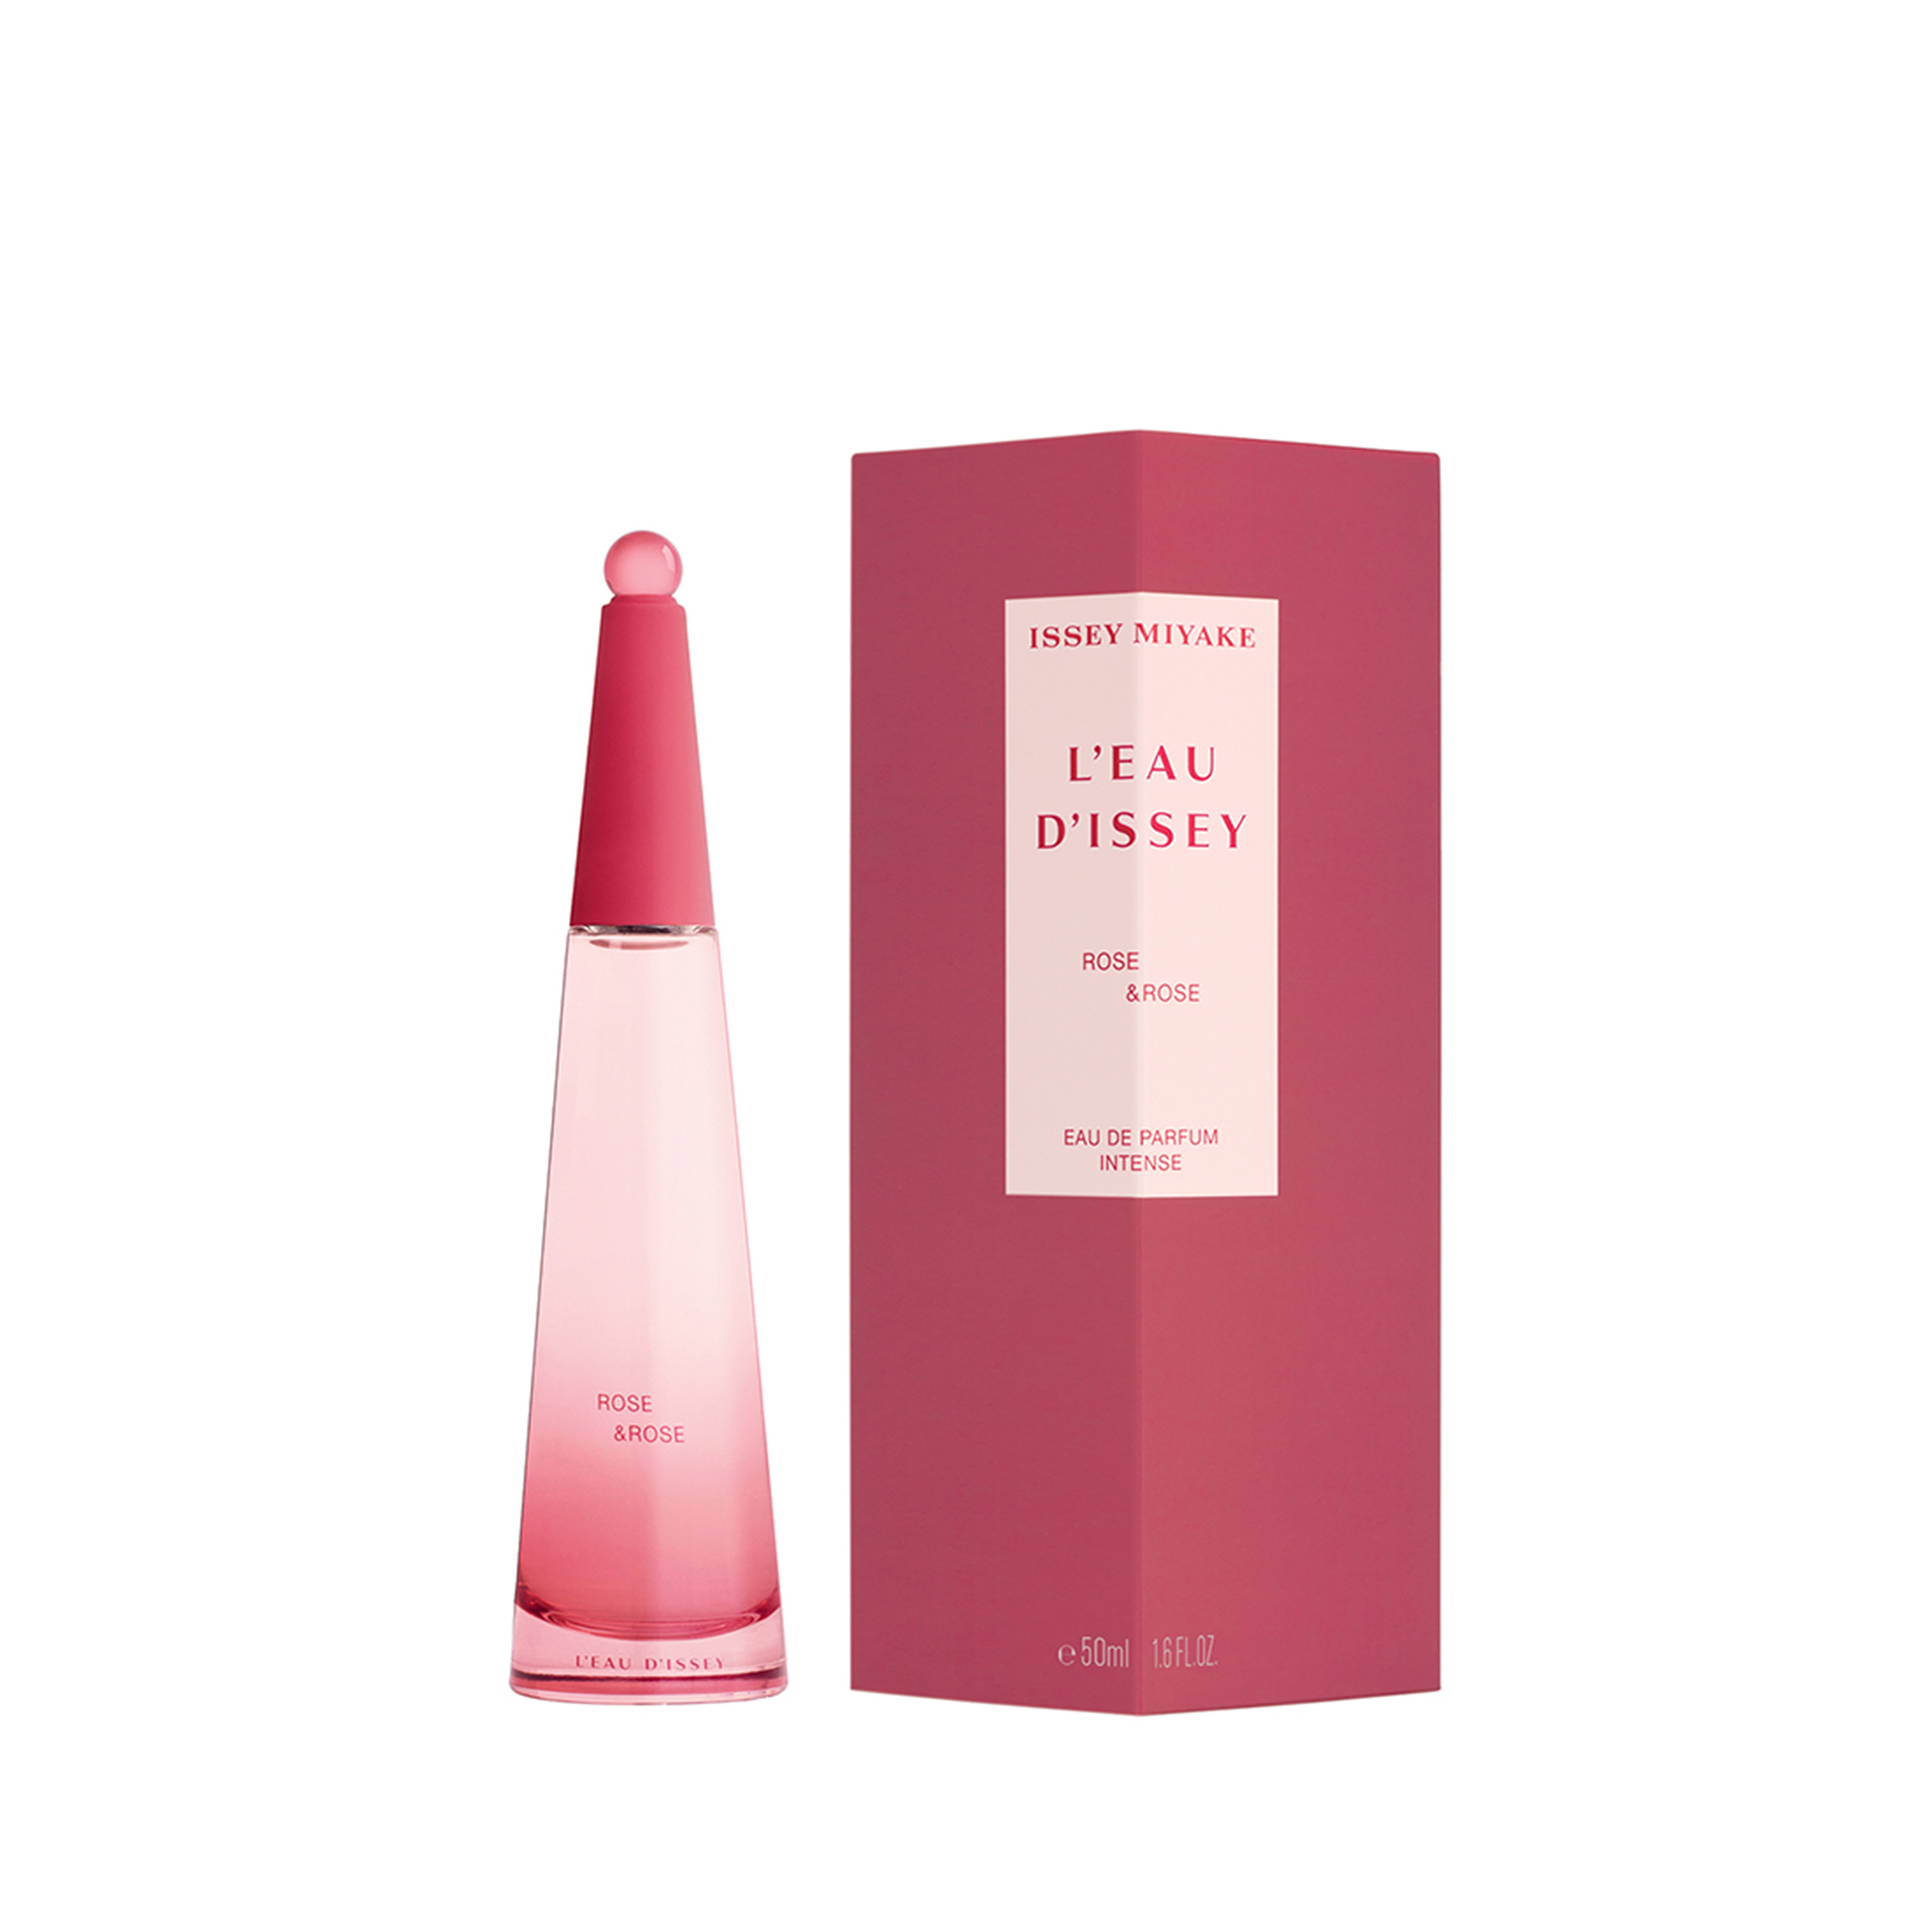 Issey Miyake L'Eau d'Issey Rose & Rose Eau de Parfum Intense 50ml ...